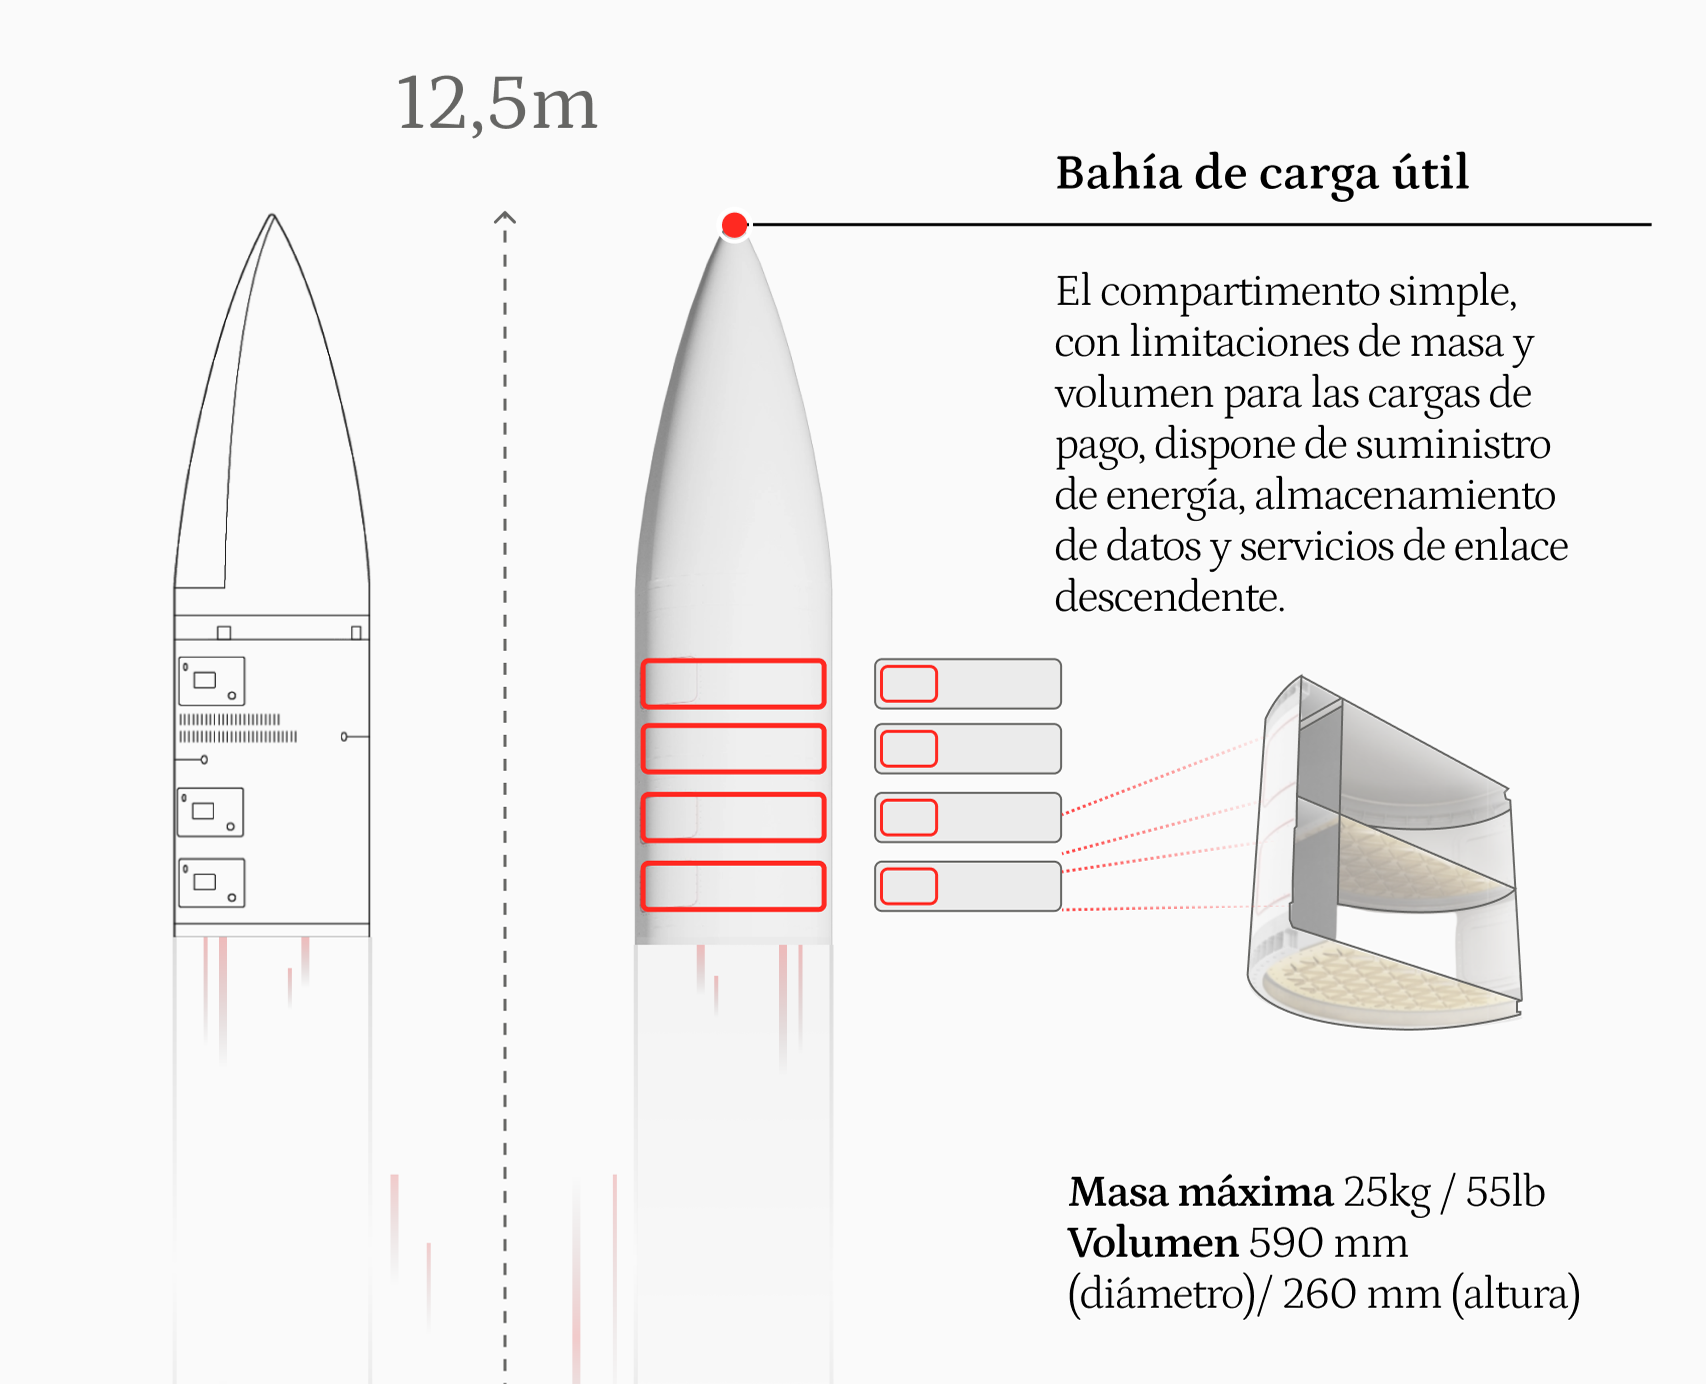 Cabeza del cohete Miura 1